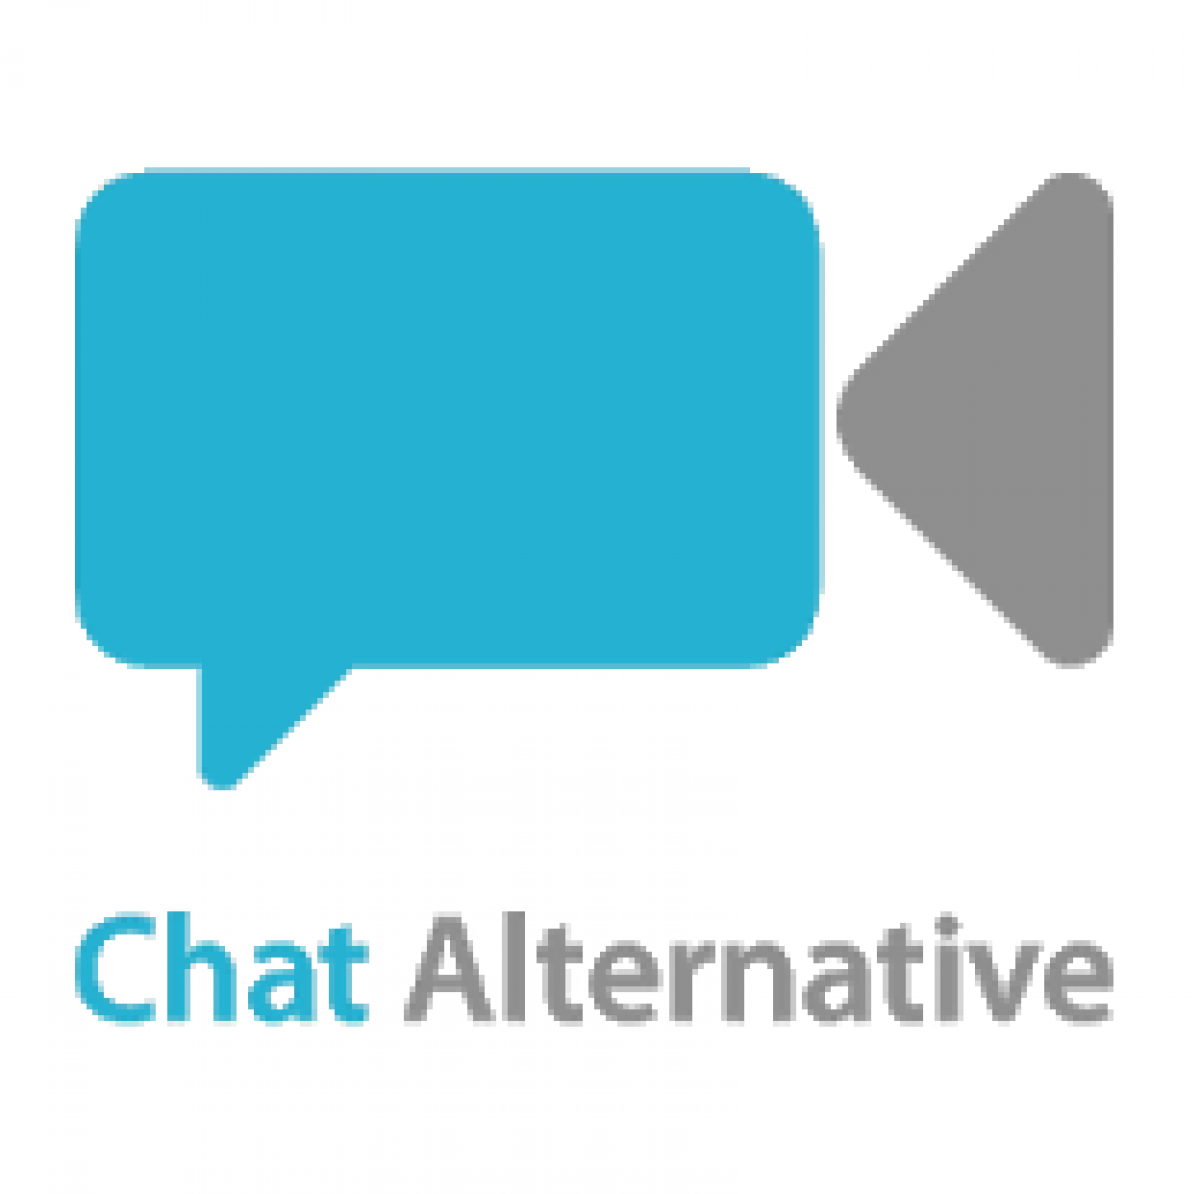 Top chat 10 alternative 10 Free